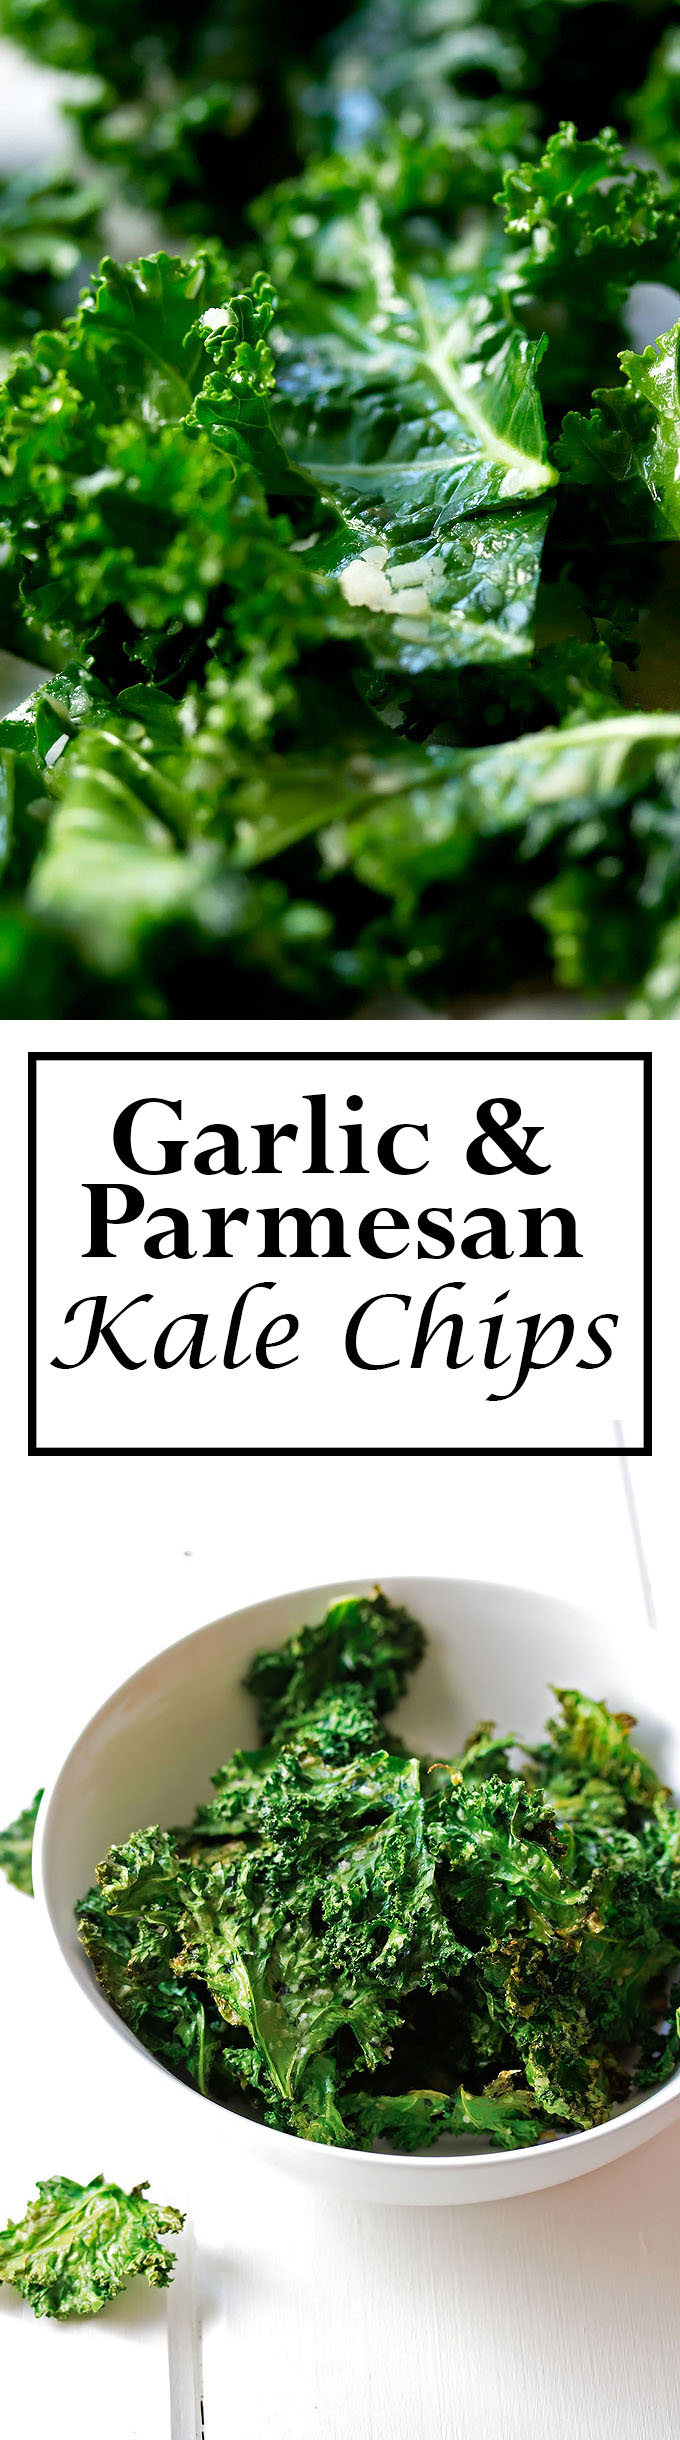 Garlic and Parmesan Kale Chips